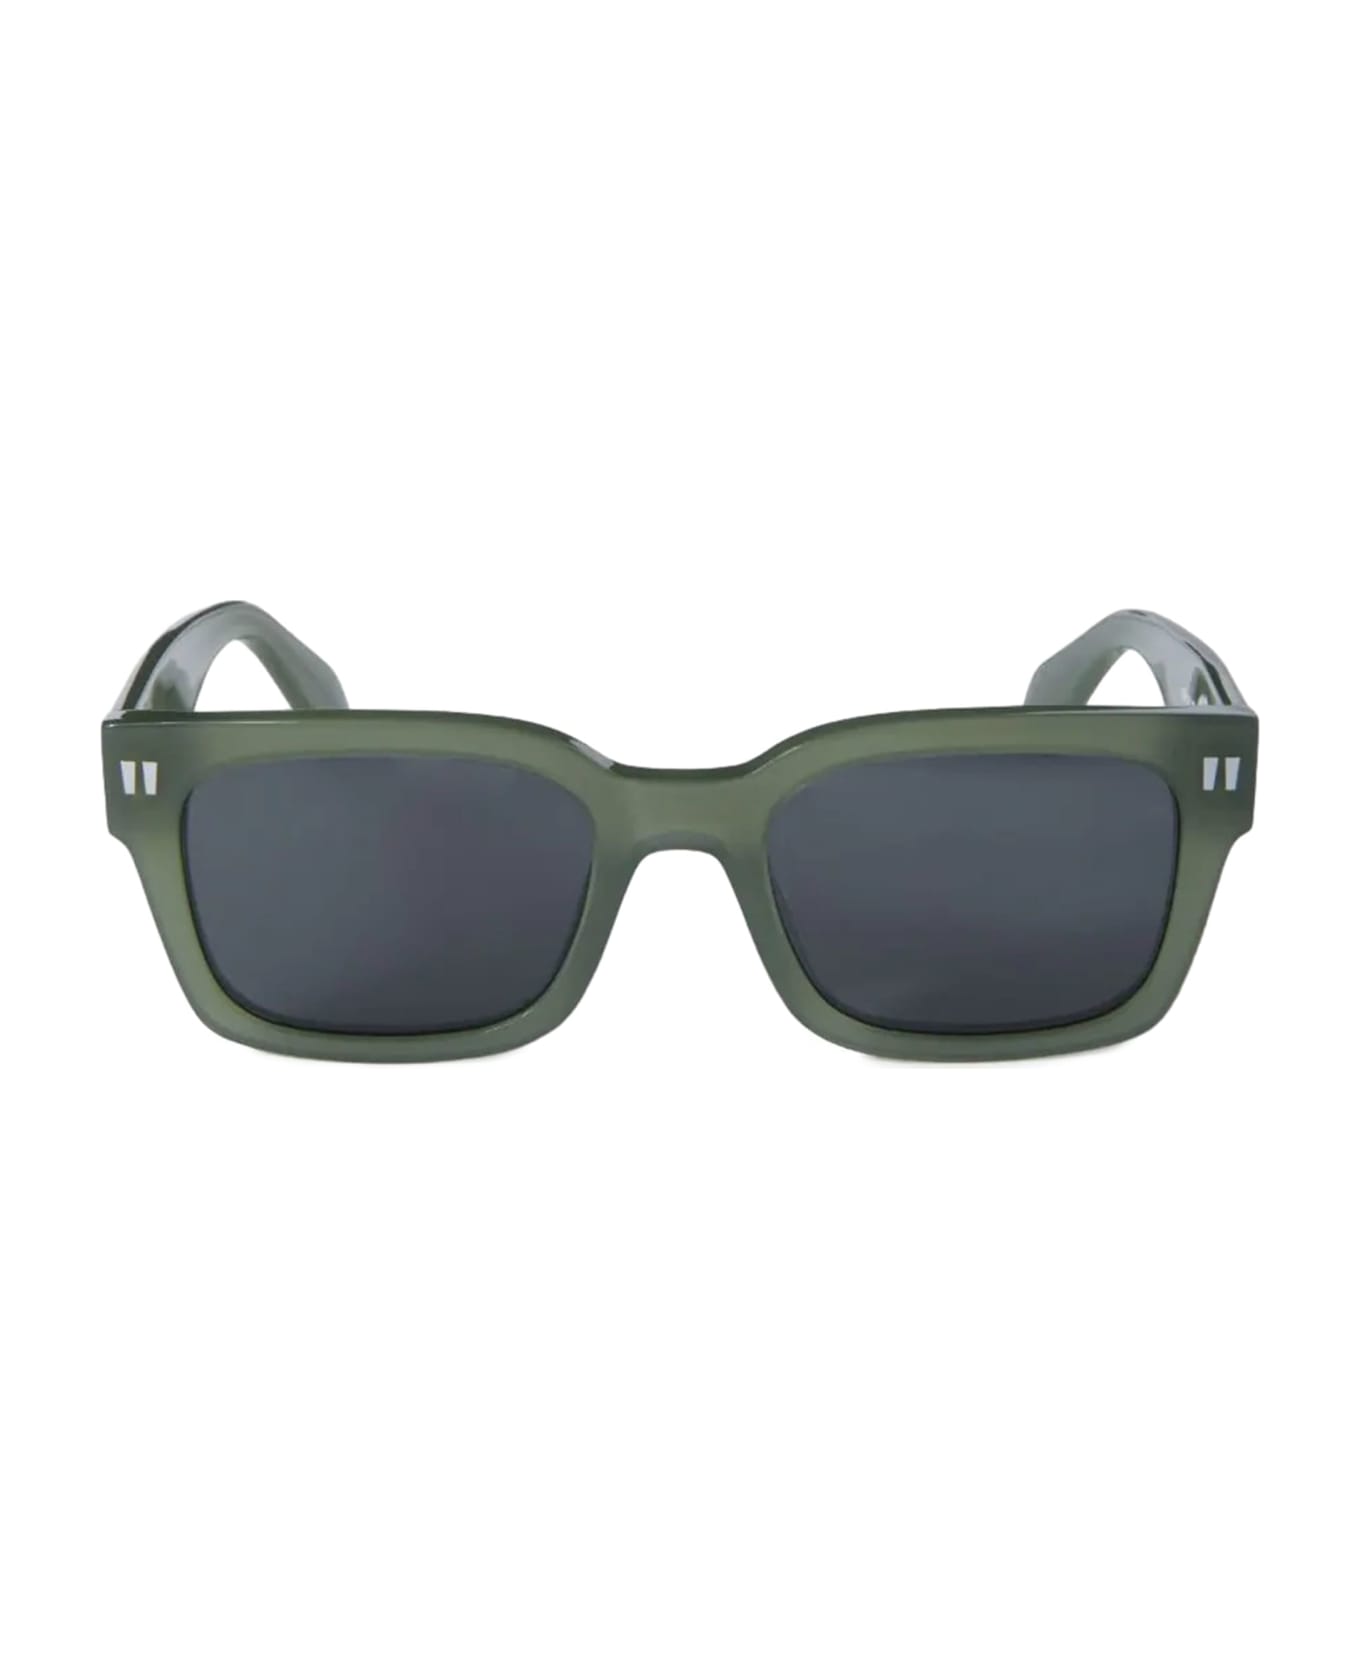 Off-White Midland - Olive Green / Dark Grey Sunglasses - olive green